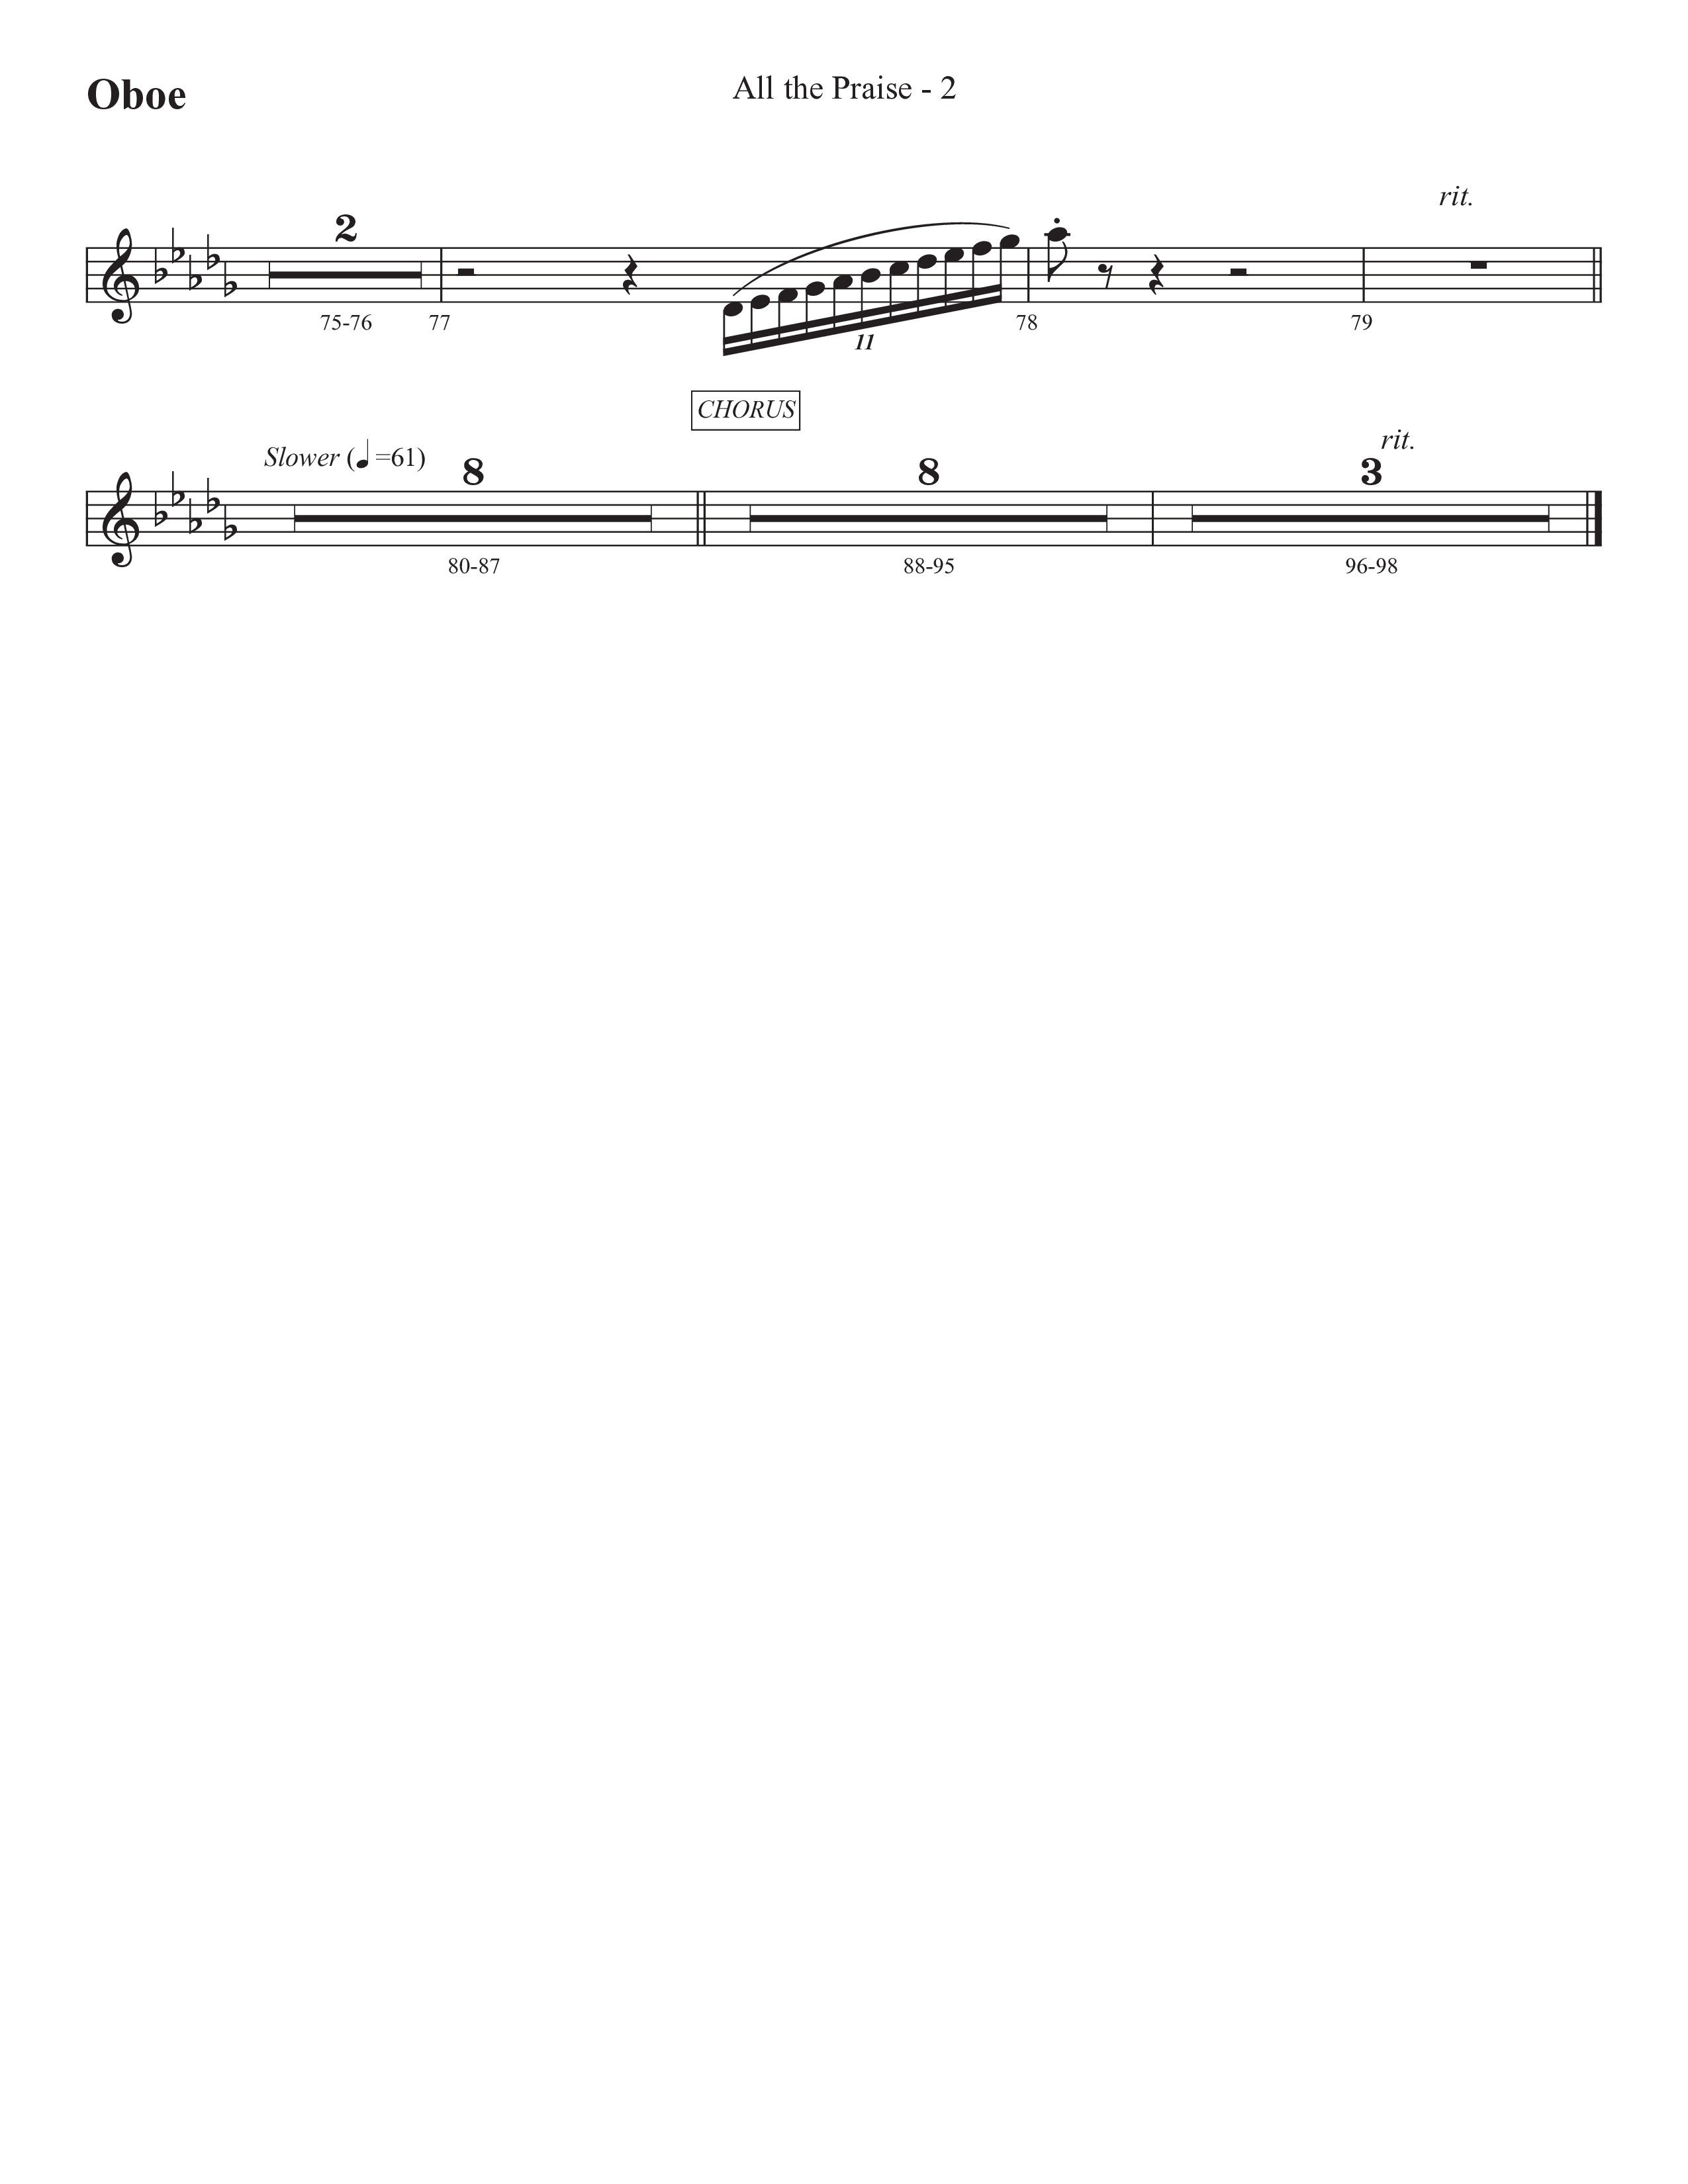 All The Praise (Choral Anthem SATB) Oboe (Prestonwood Worship / Prestonwood Choir / Arr. Michael Neale / Orch. Carson Wagner)